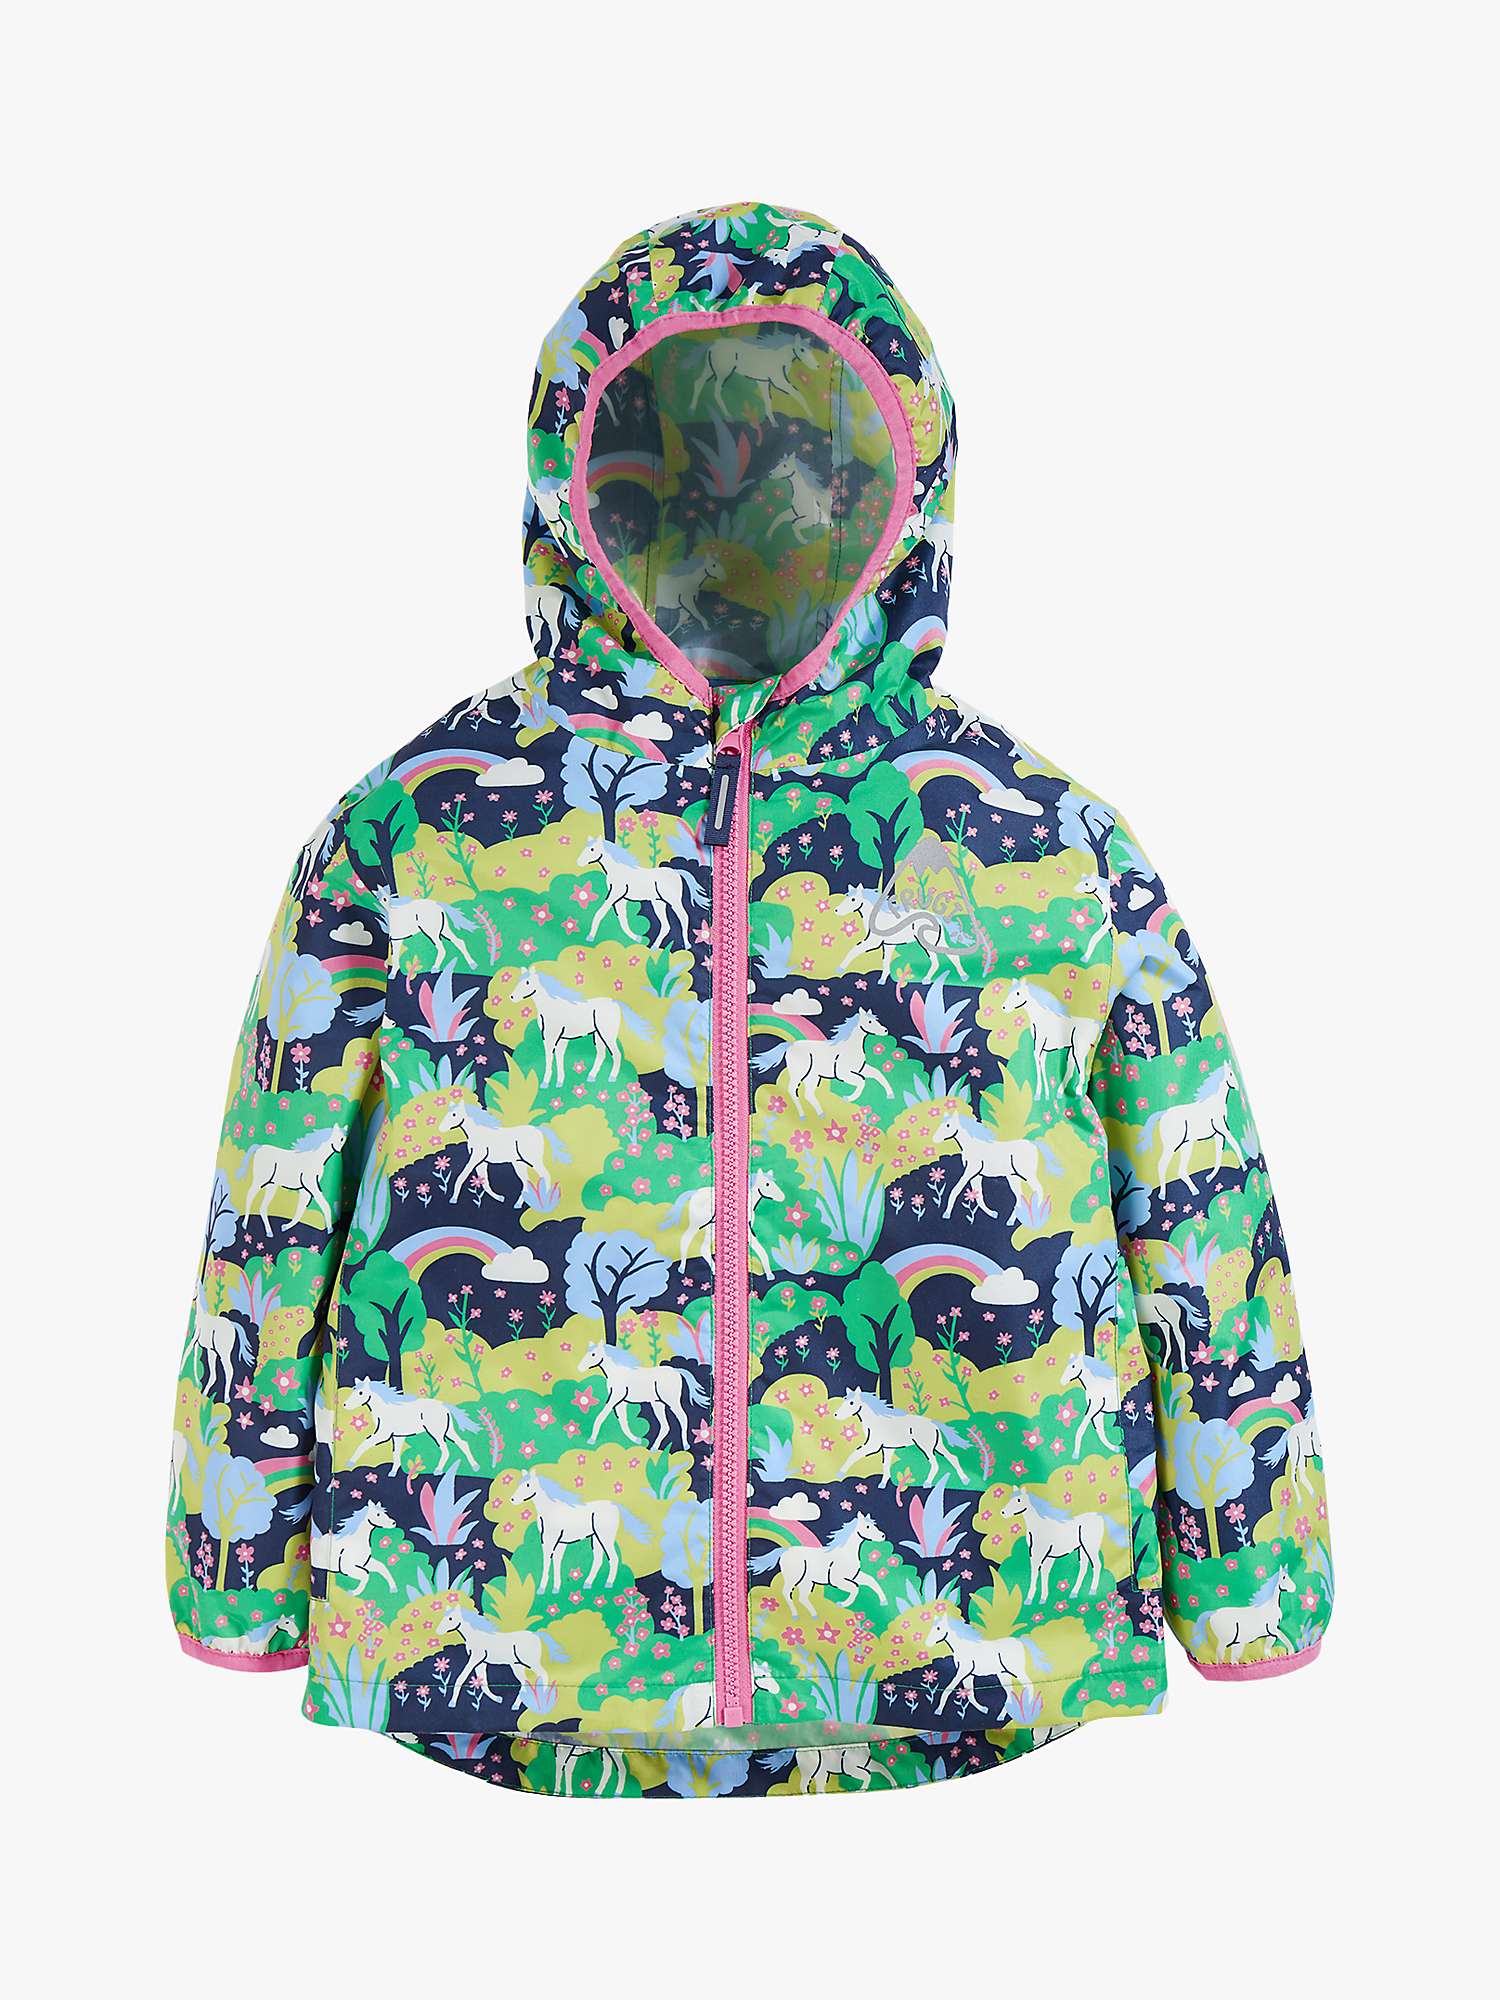 Buy Frugi Kids' Rain or Shine Hedgerow Waterproof Jacket, Indigo/Multi Online at johnlewis.com